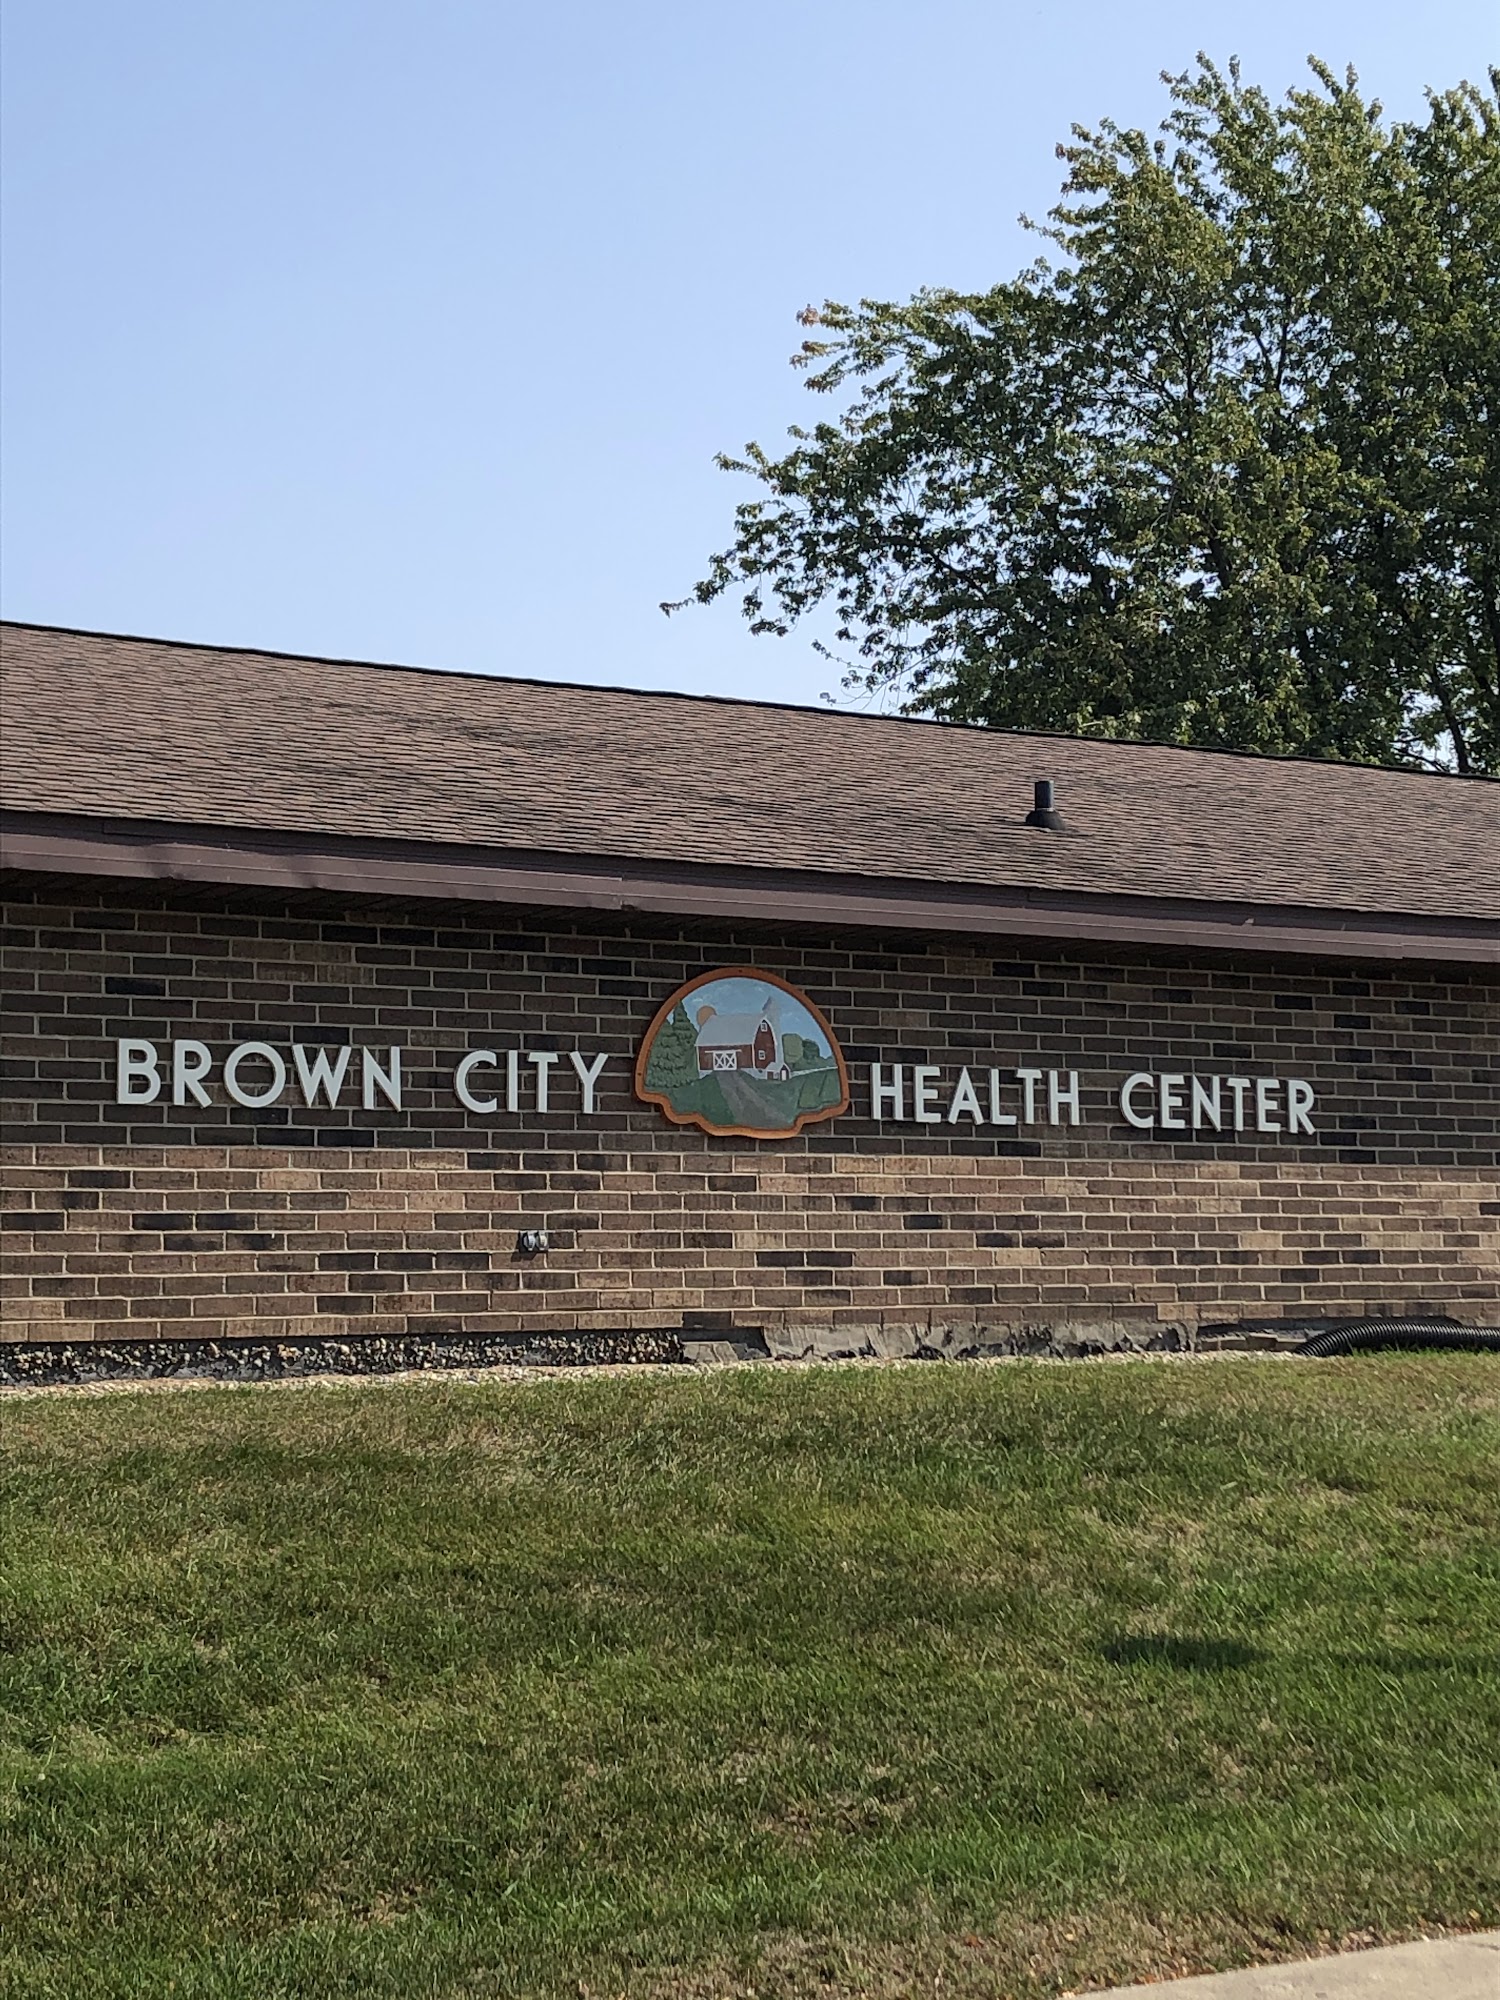 McLaren Lapeer Region - Brown City Health Center 7115 Cade Rd, Brown City Michigan 48416